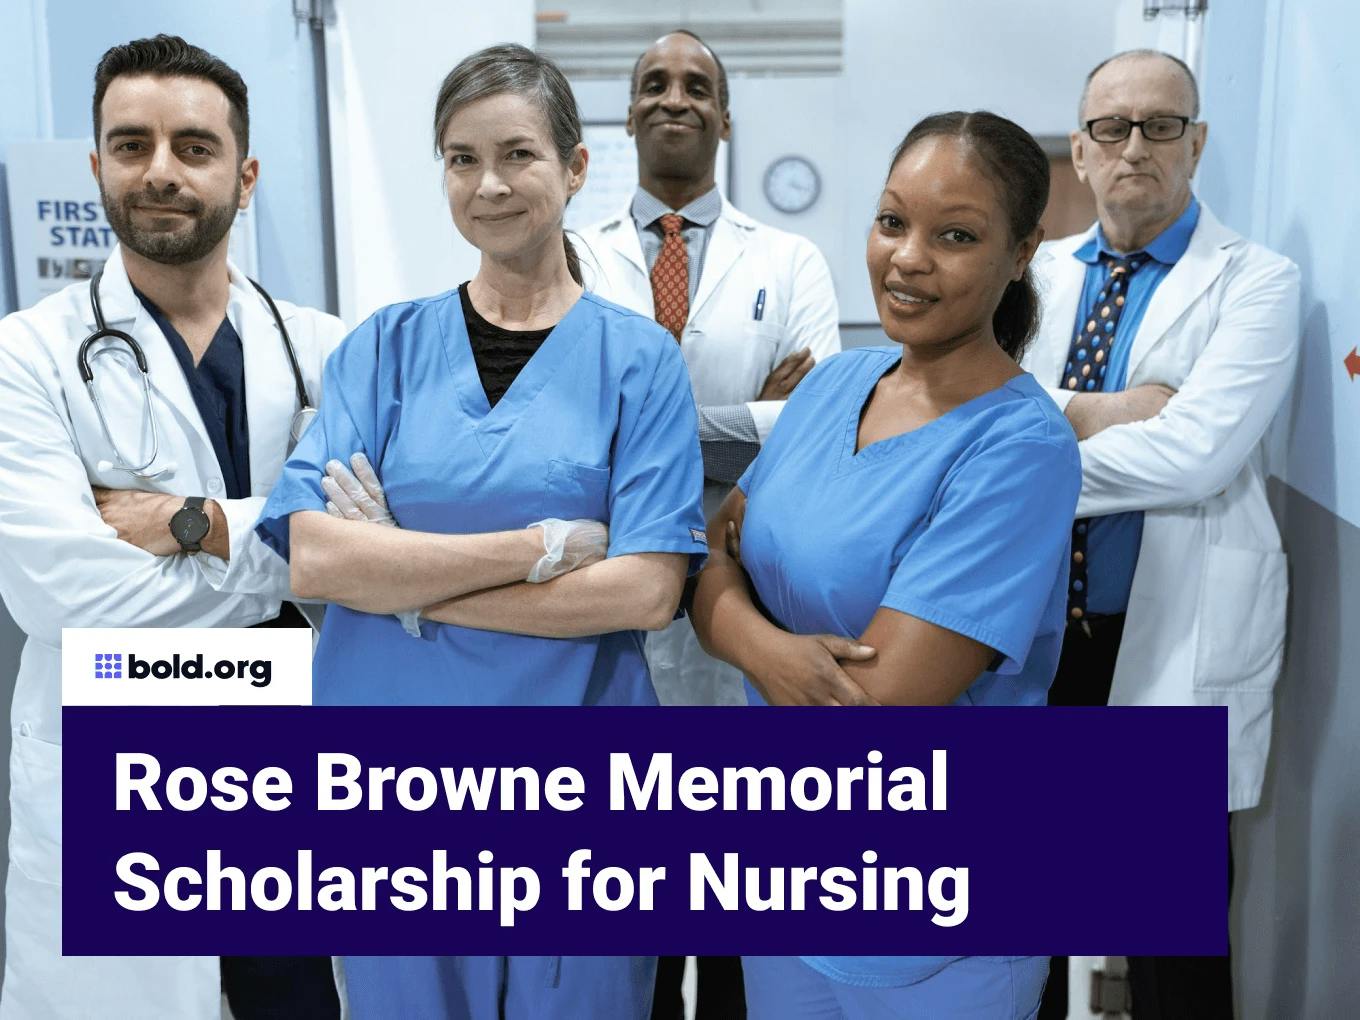 Rose Browne Memorial Scholarship for Nursing